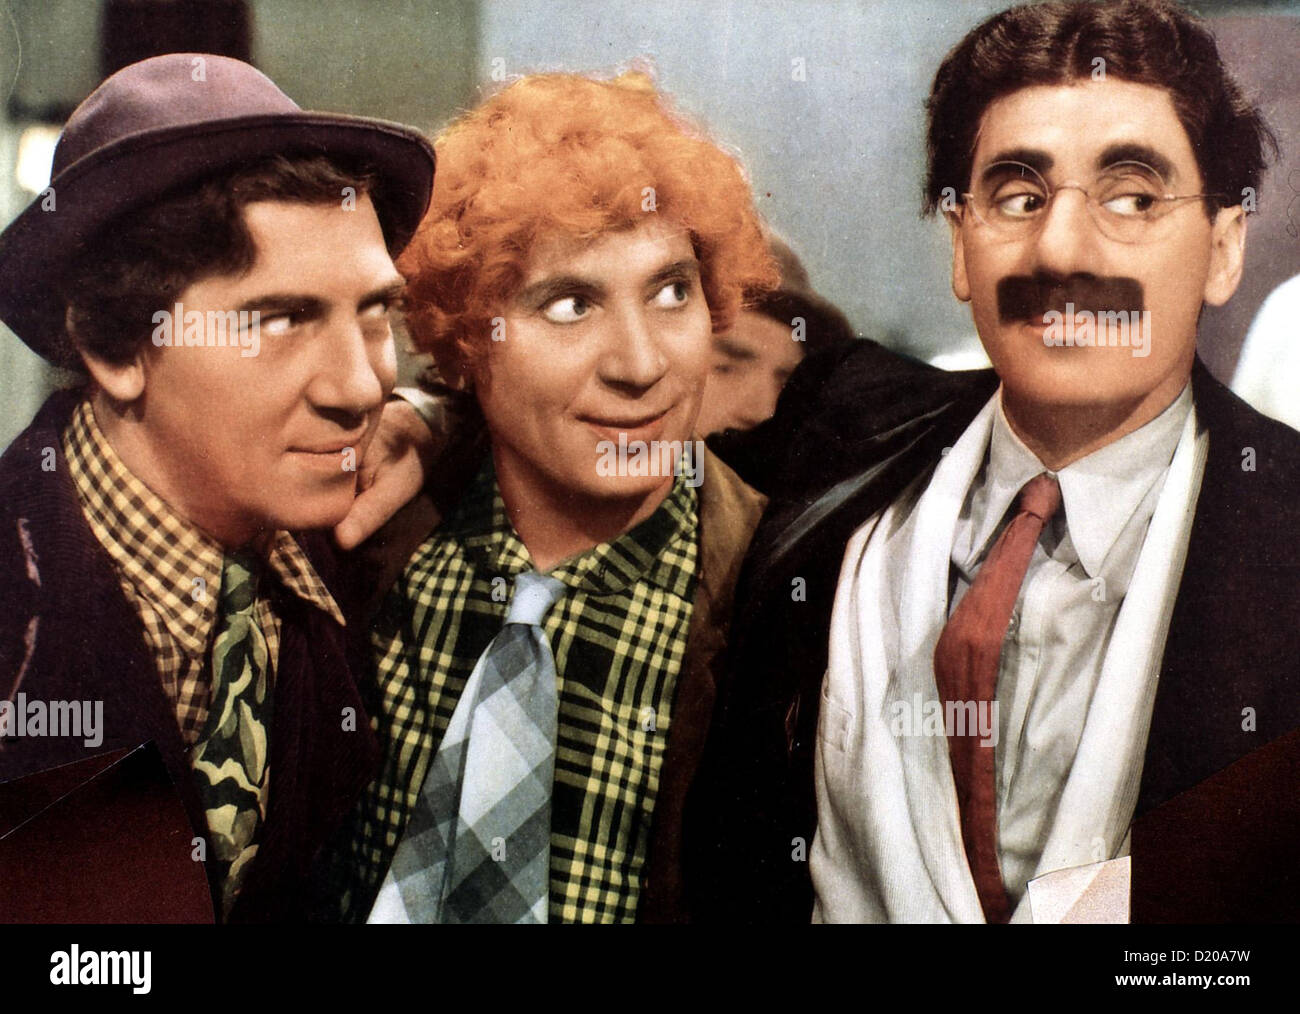 Die Marx-Brothers Im Zirkus  Marx Brothers: At Circus  Chico Marx, Harpo Marx, Groucho Marx Anwalt Loophole (Groucho Marx) und Stock Photo